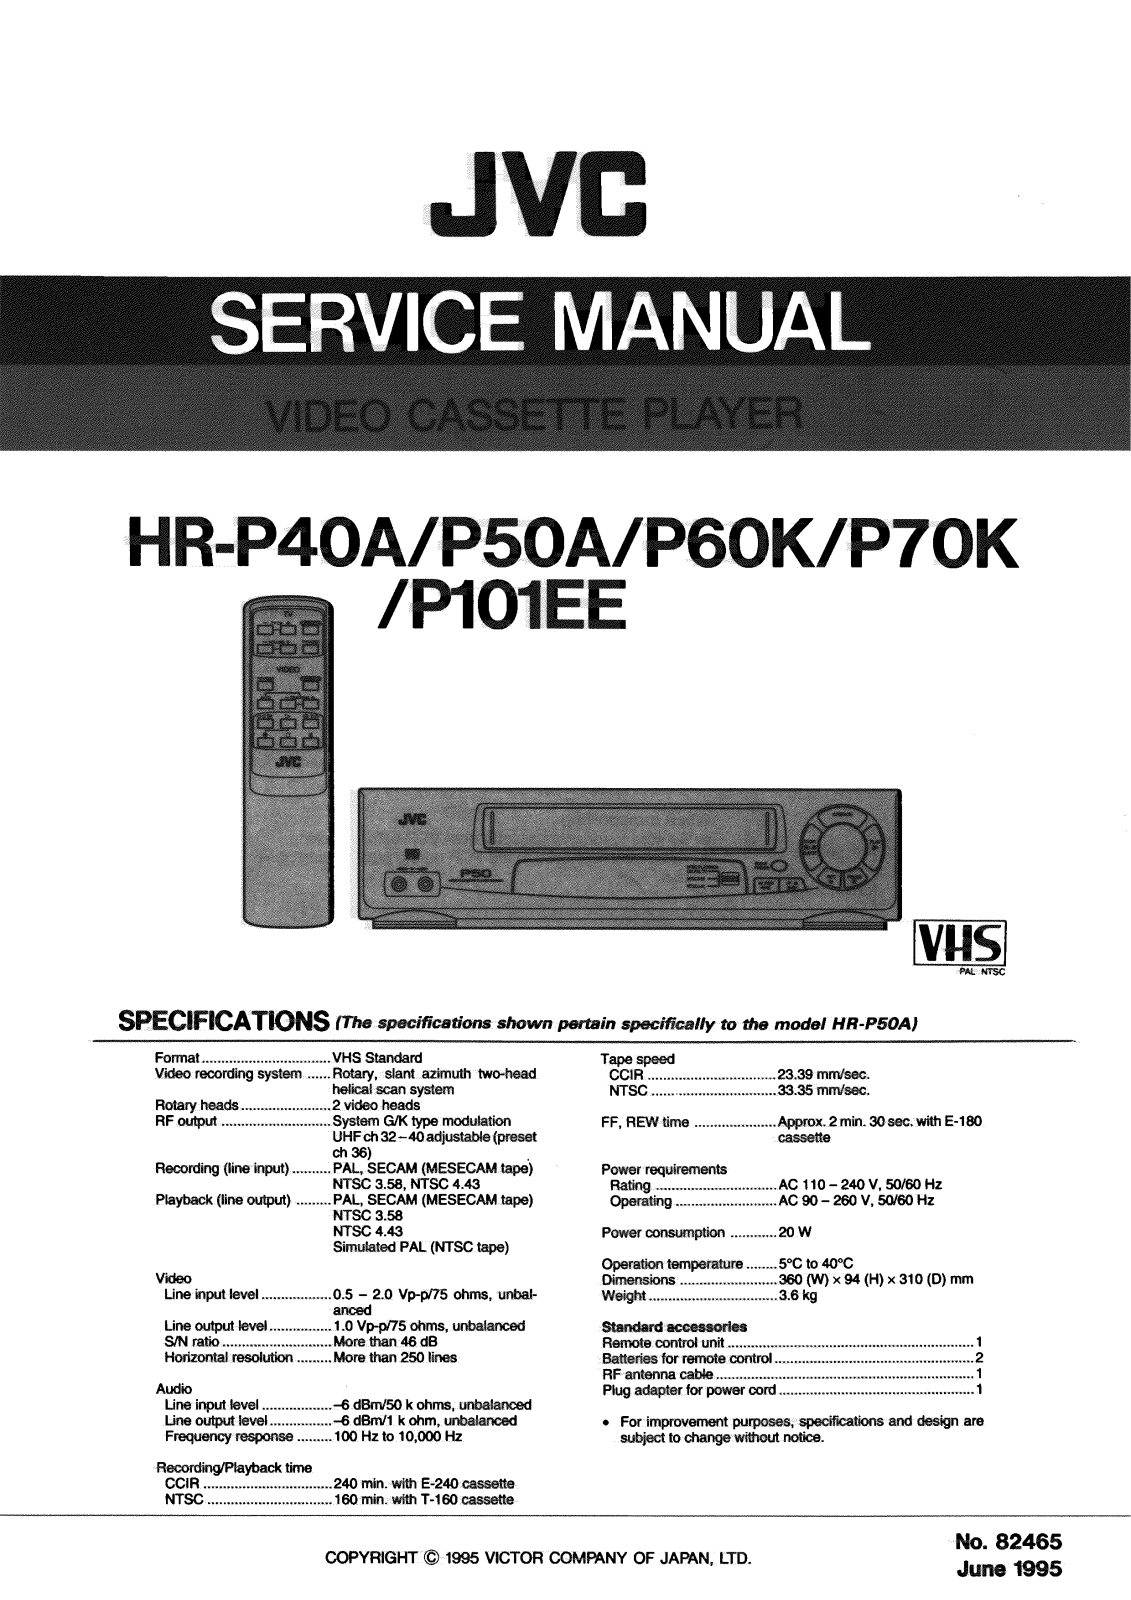 JVC HR-P101EE, HR-P40A, HR-P50A, HR-P60K, HR-P70K Service Manual